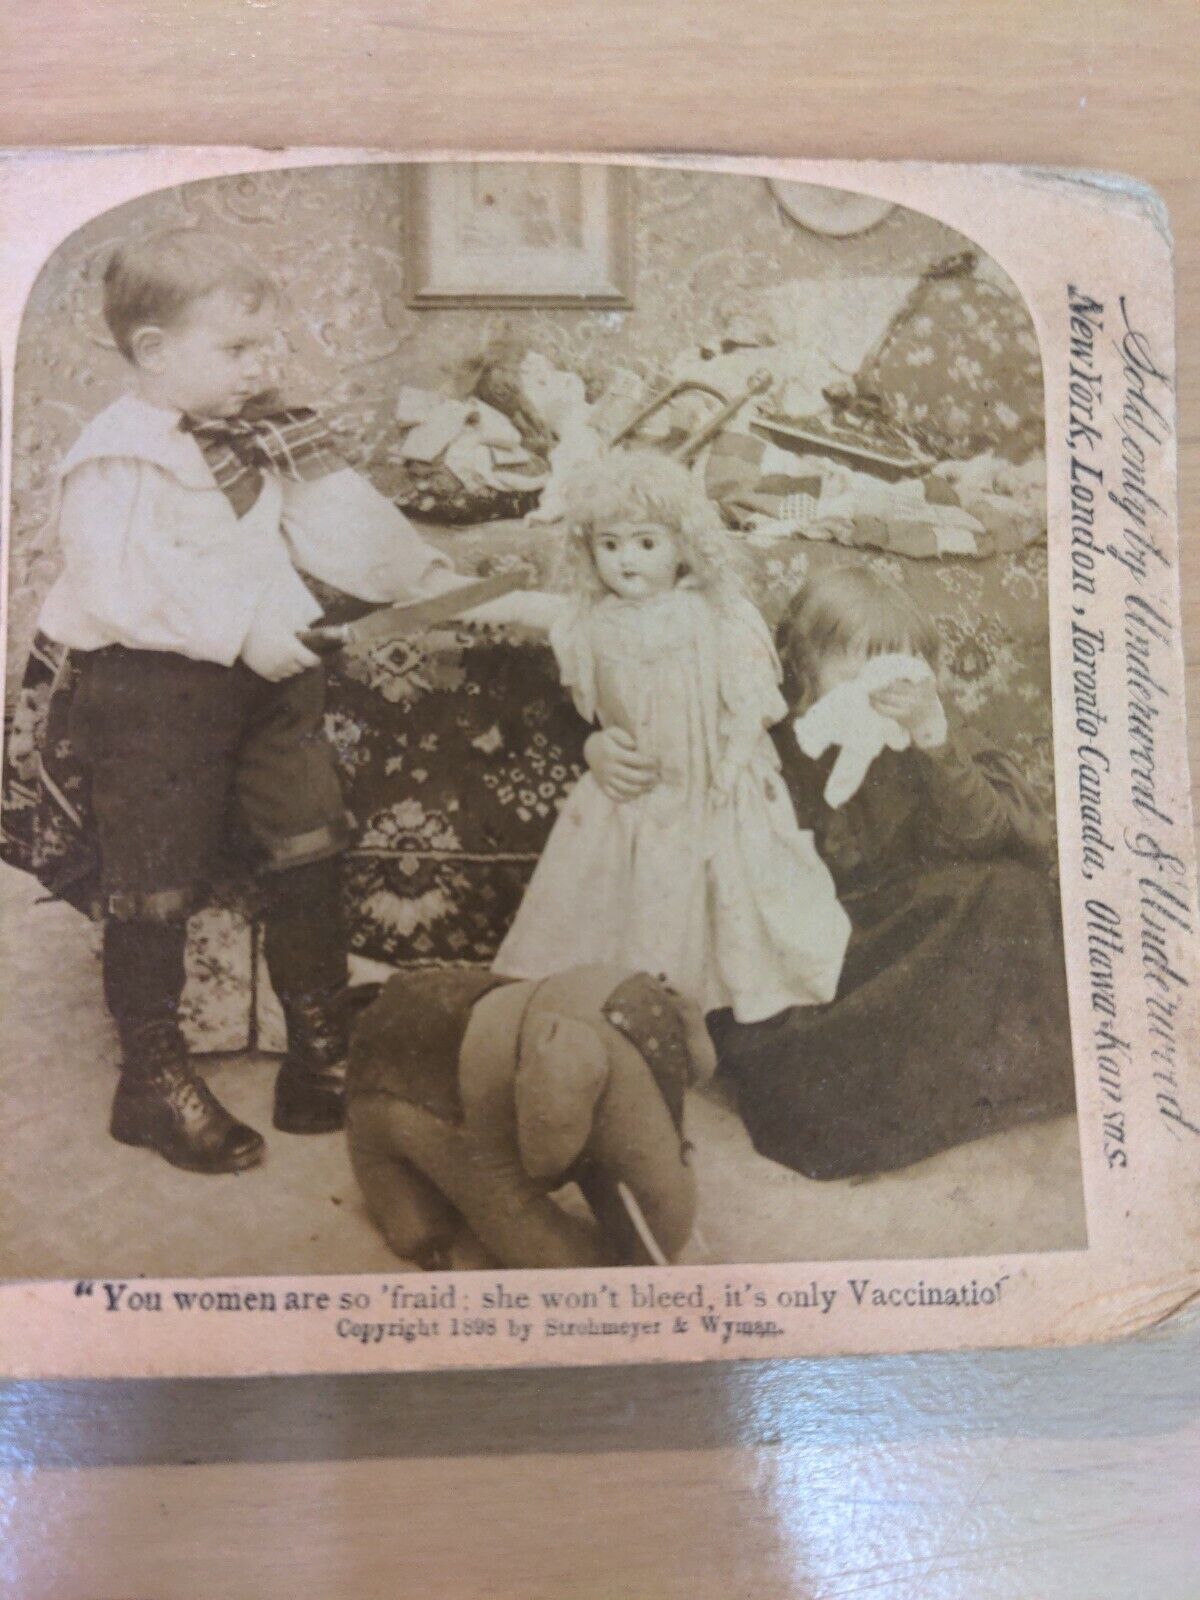 Underwood Stereoview Photograph 1898 Vaccination Humor Children & Doll 